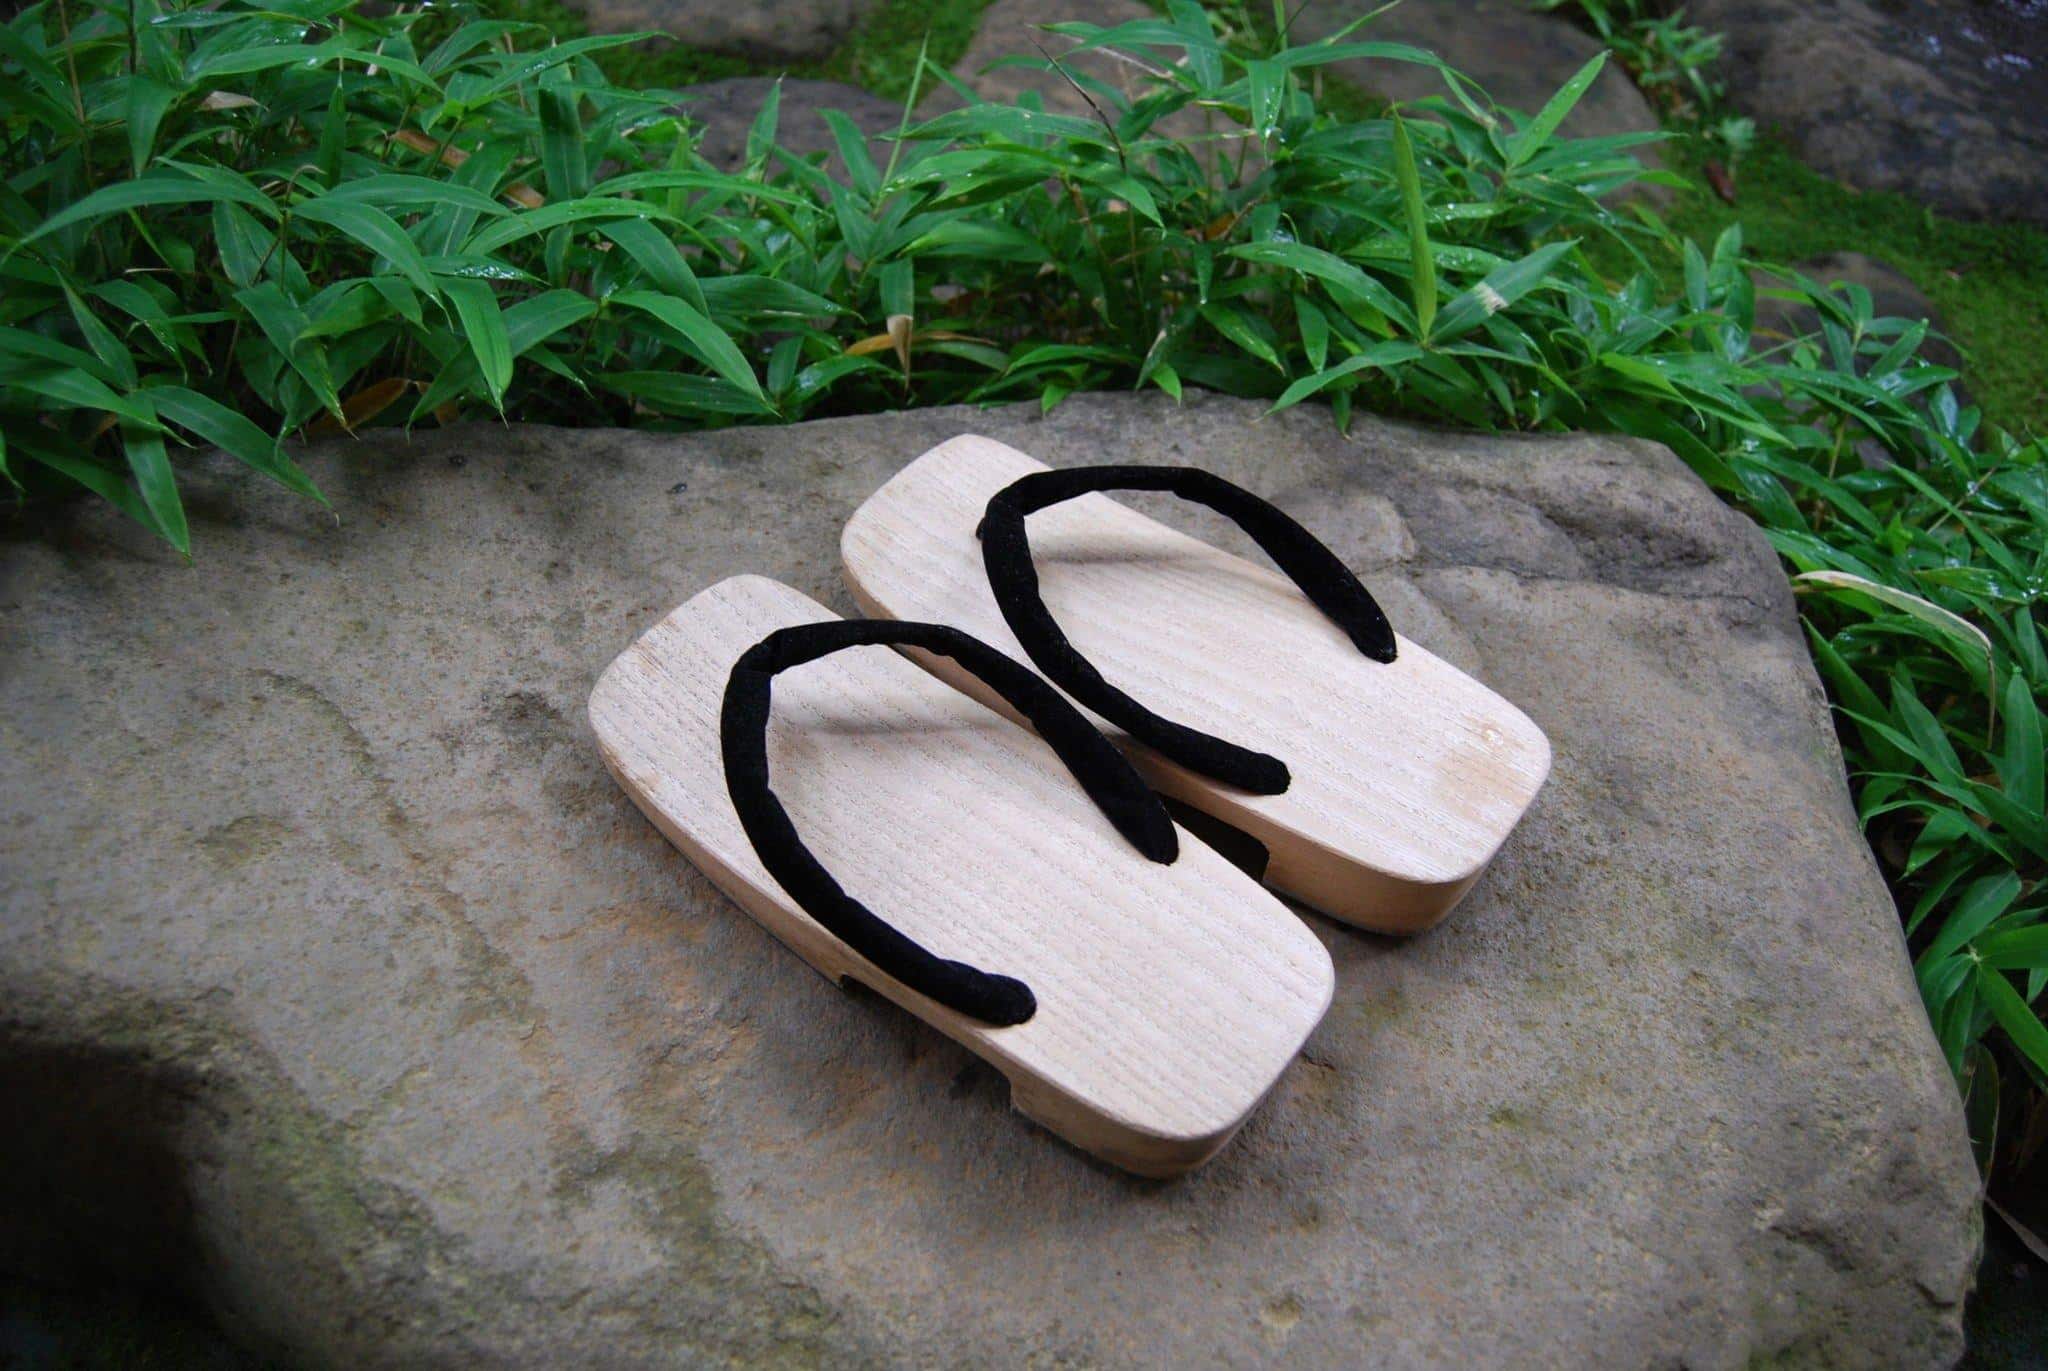 sandals for flat feet